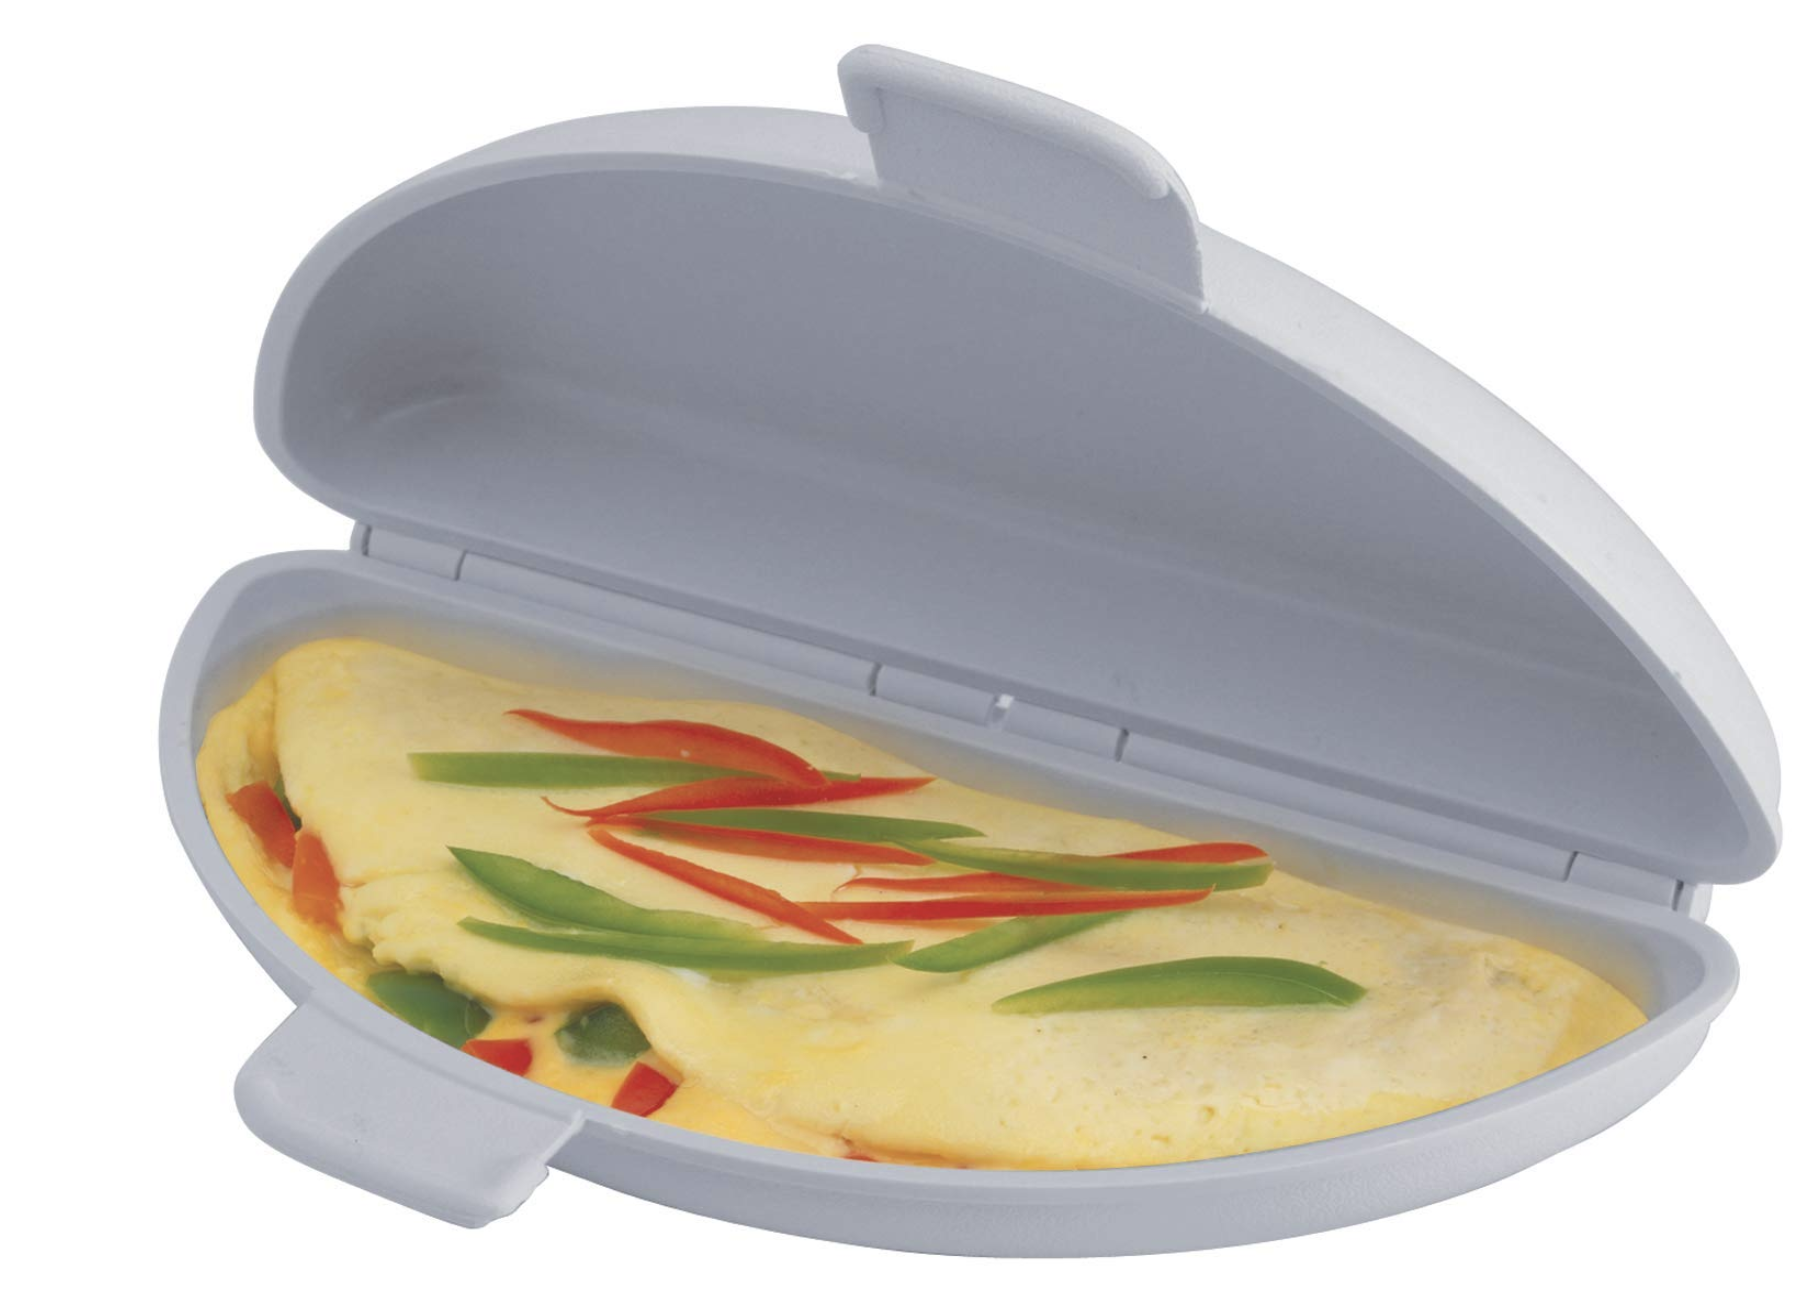 microwave omelet maker, college kitchen essentials 